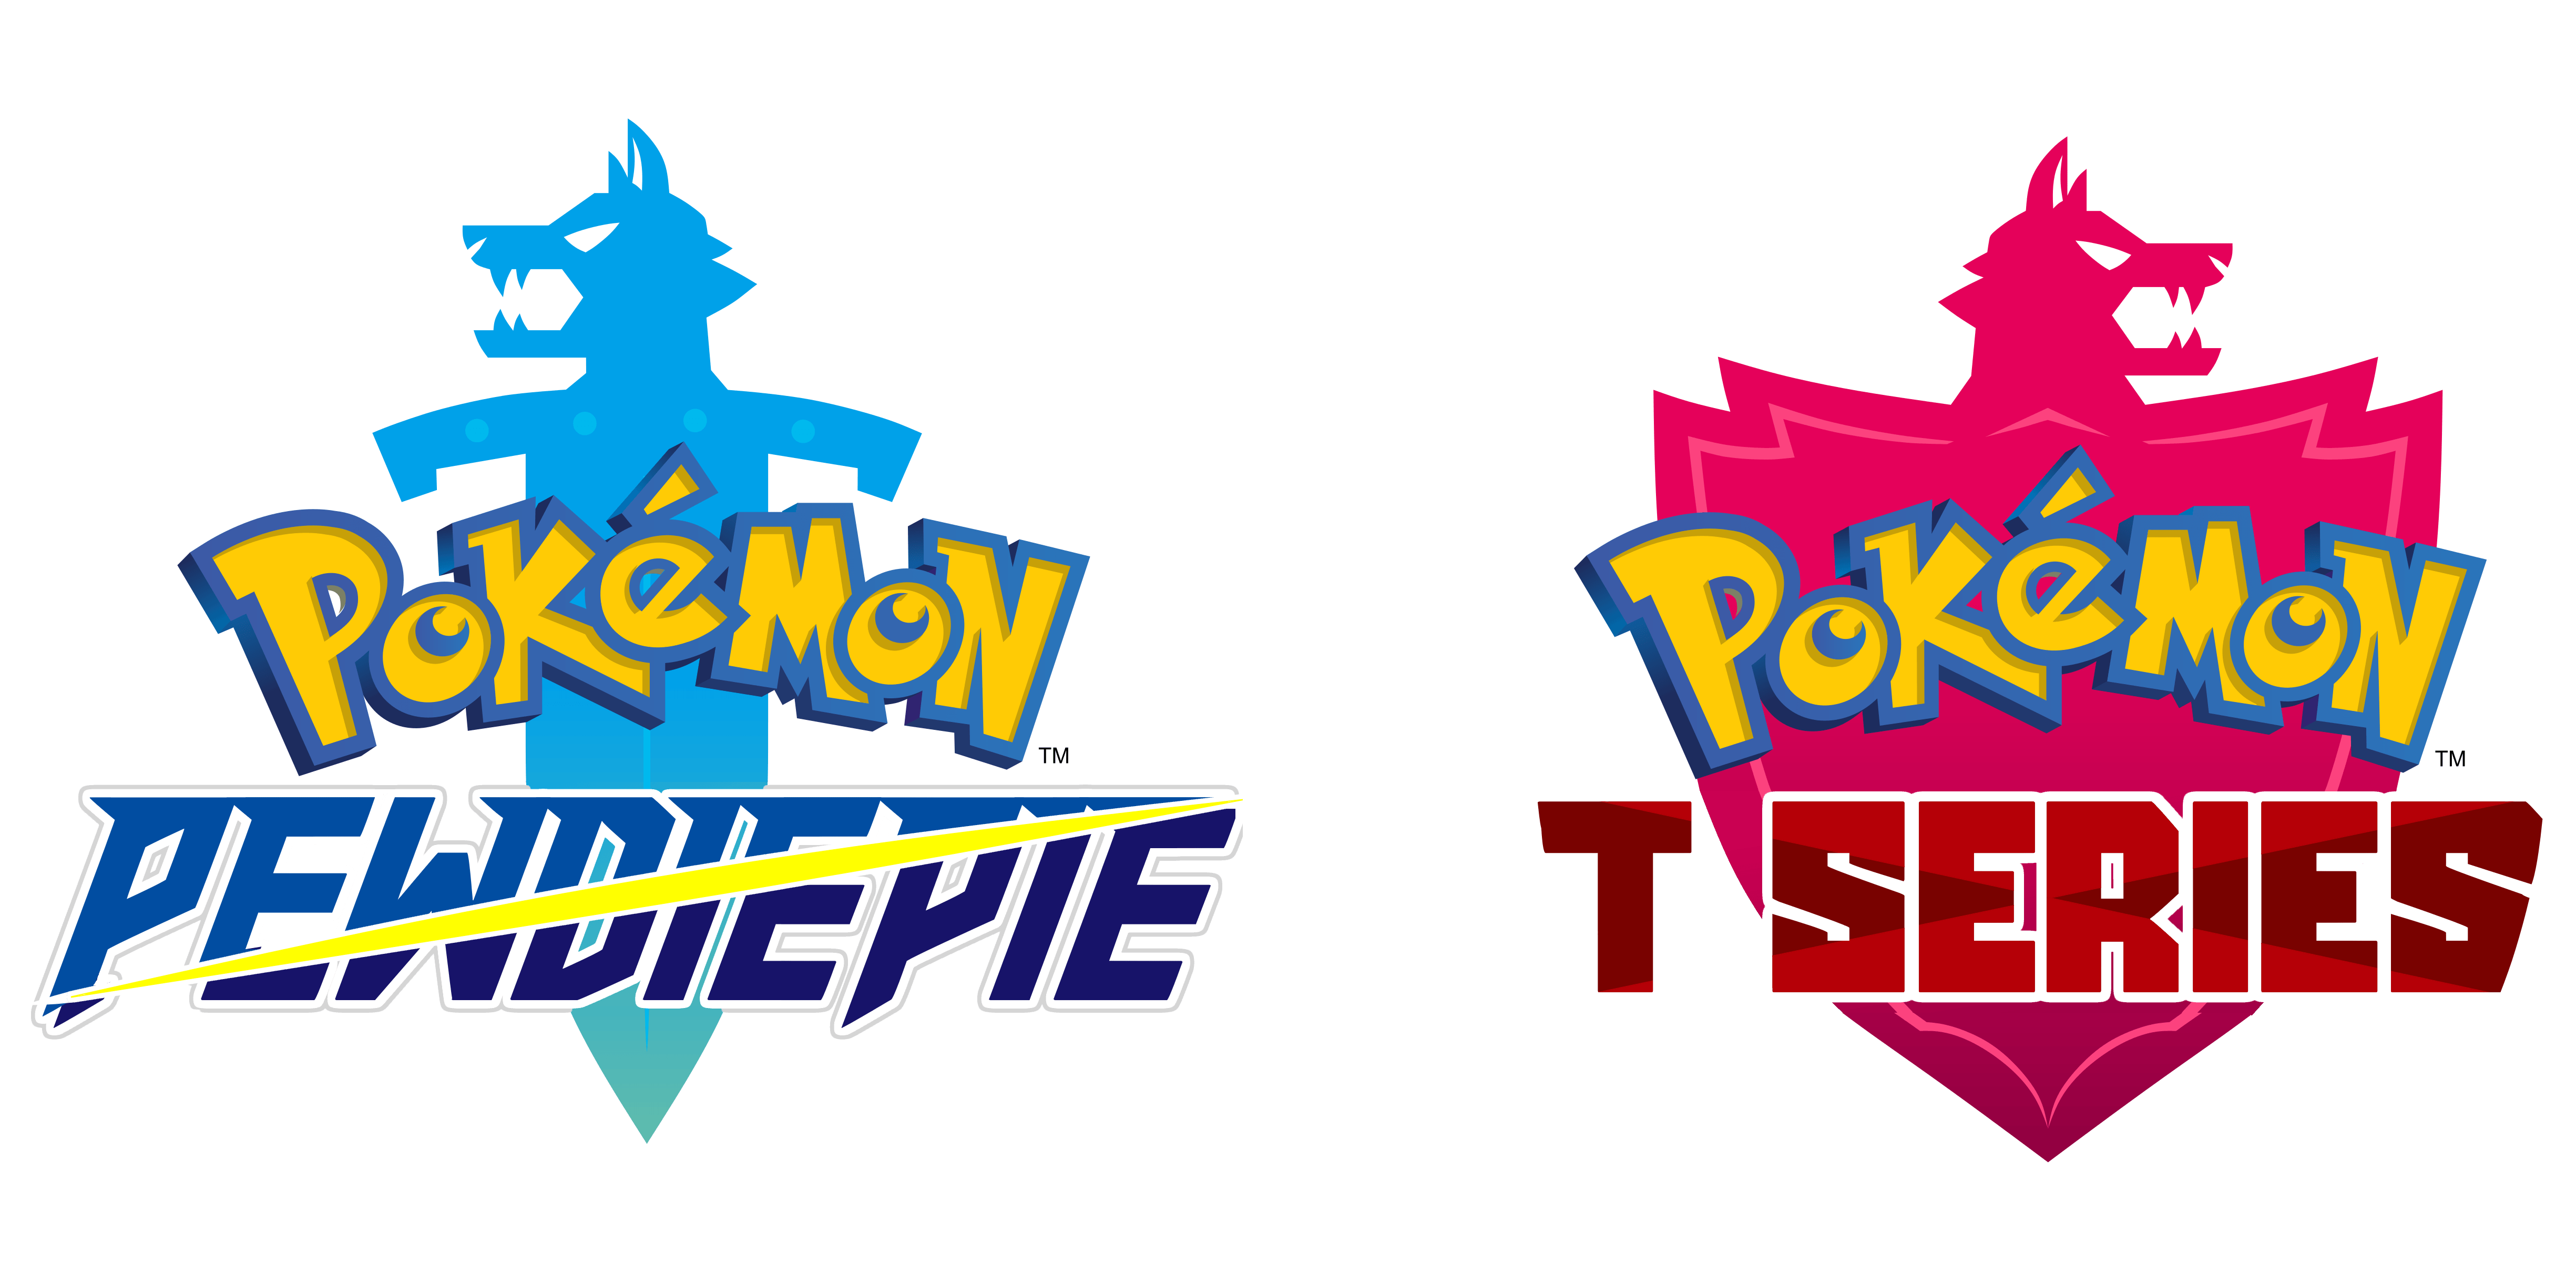 Pokeman Logo - Pewdiepie vs T-Series Pokemon Logo | Pokémon Sword and Shield | Know ...